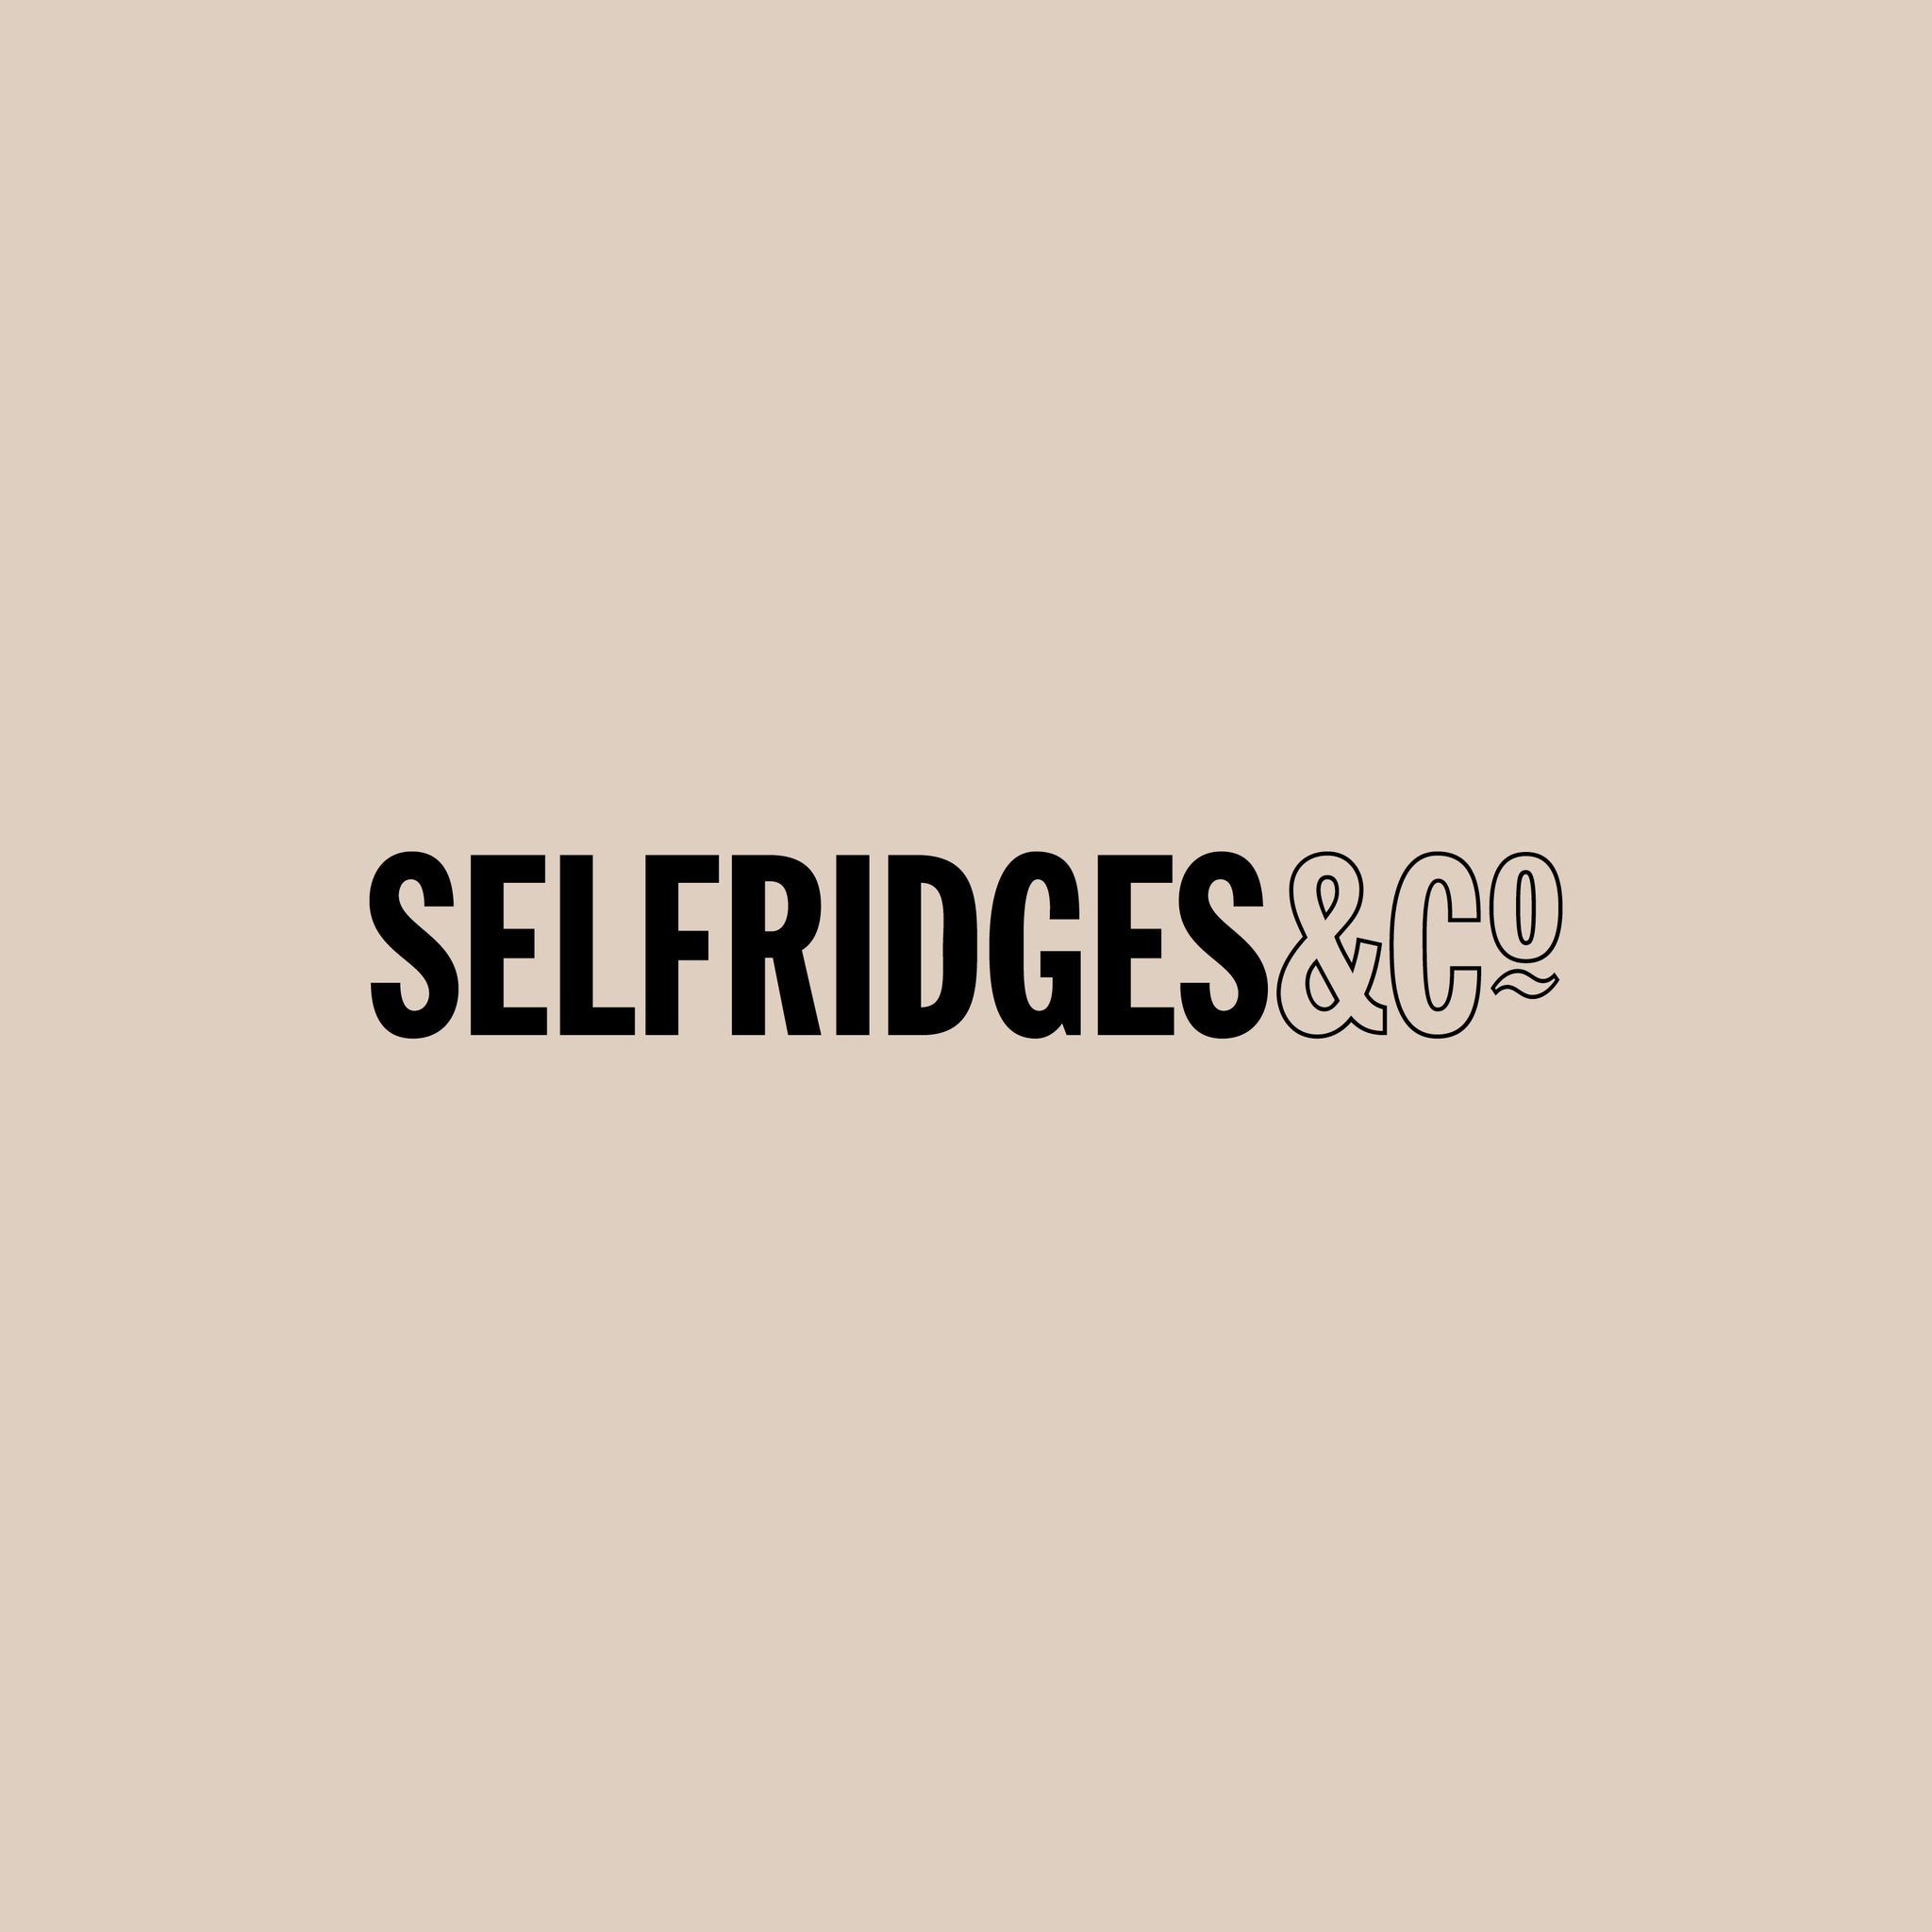 Sop's in Selfridges.